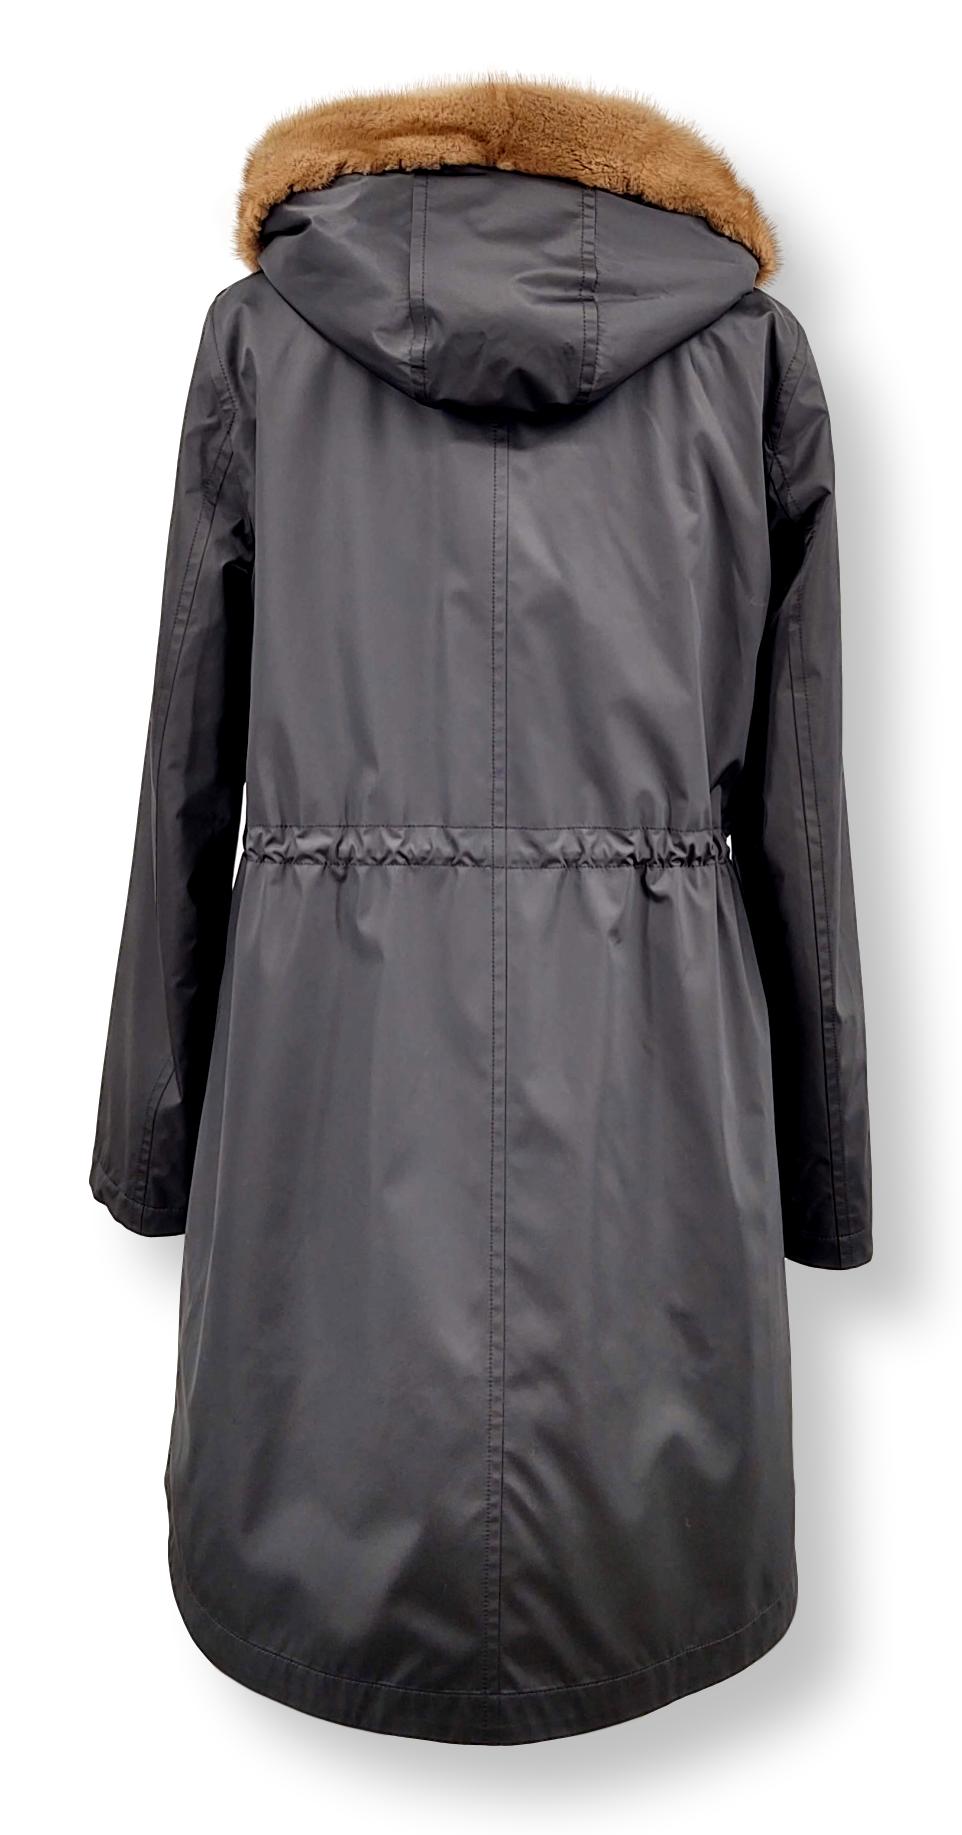 DPW98115-1, 92 cm. - Hood - Textile - Mink - Women - Black